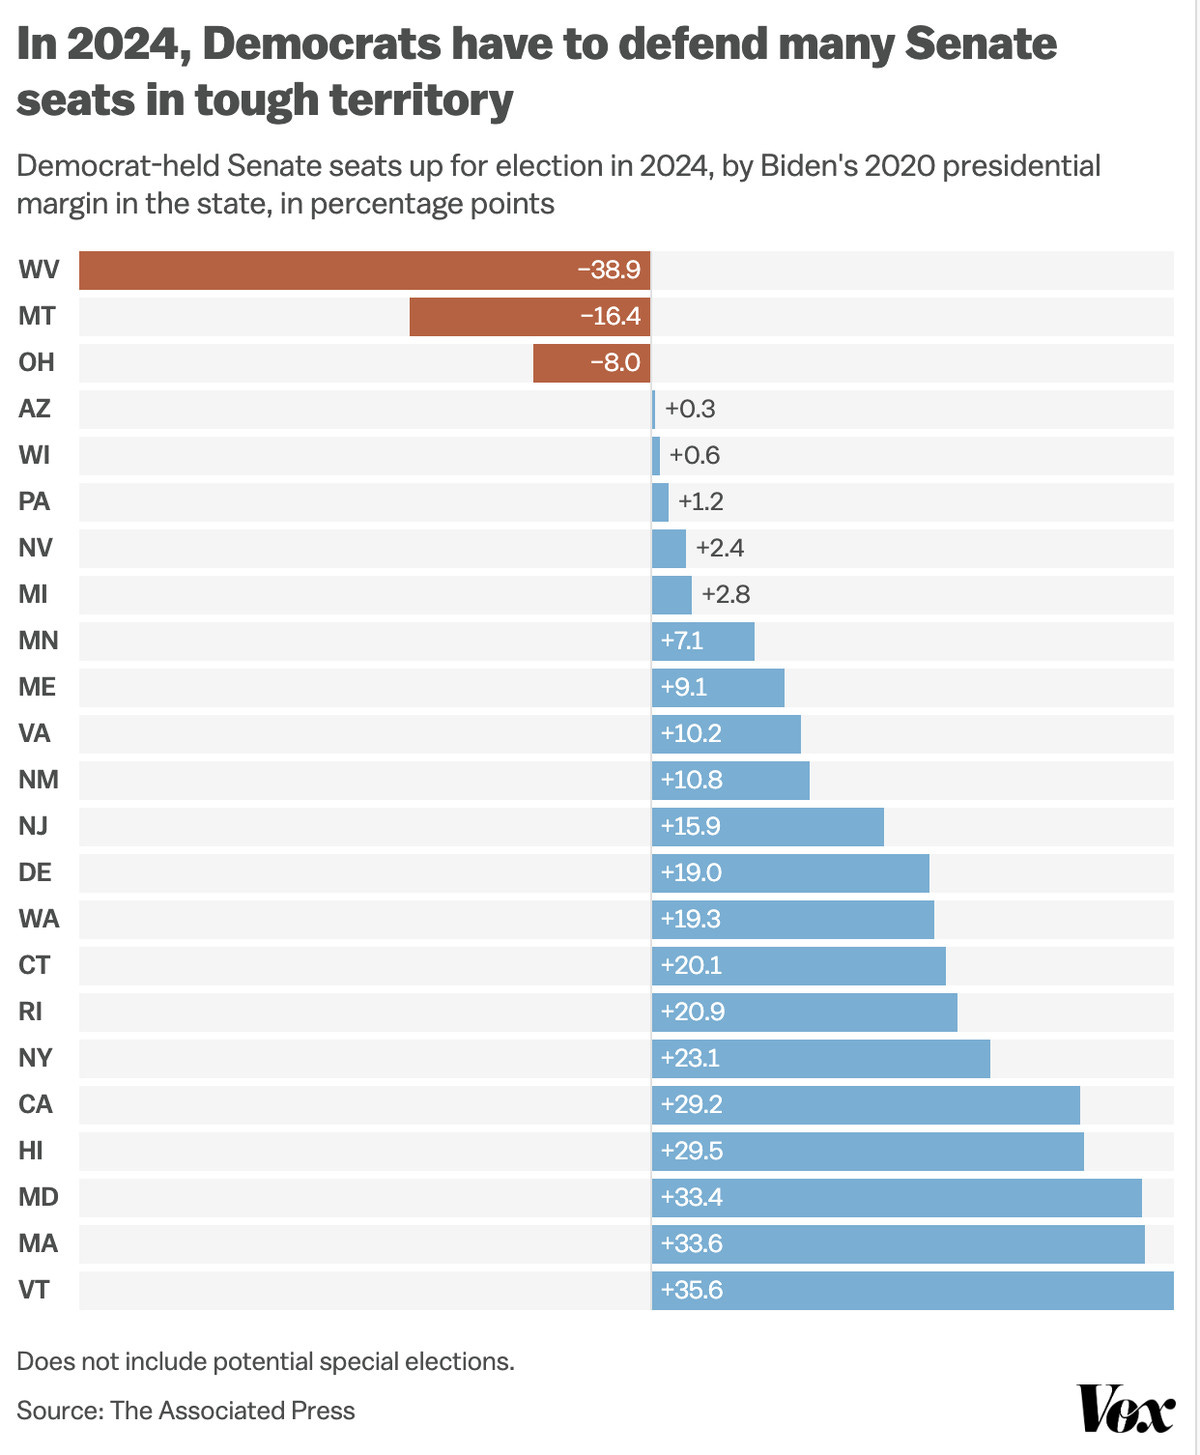 Joe Manchin retirement hurts Democrats' 2024 Senate majority chances - Vox